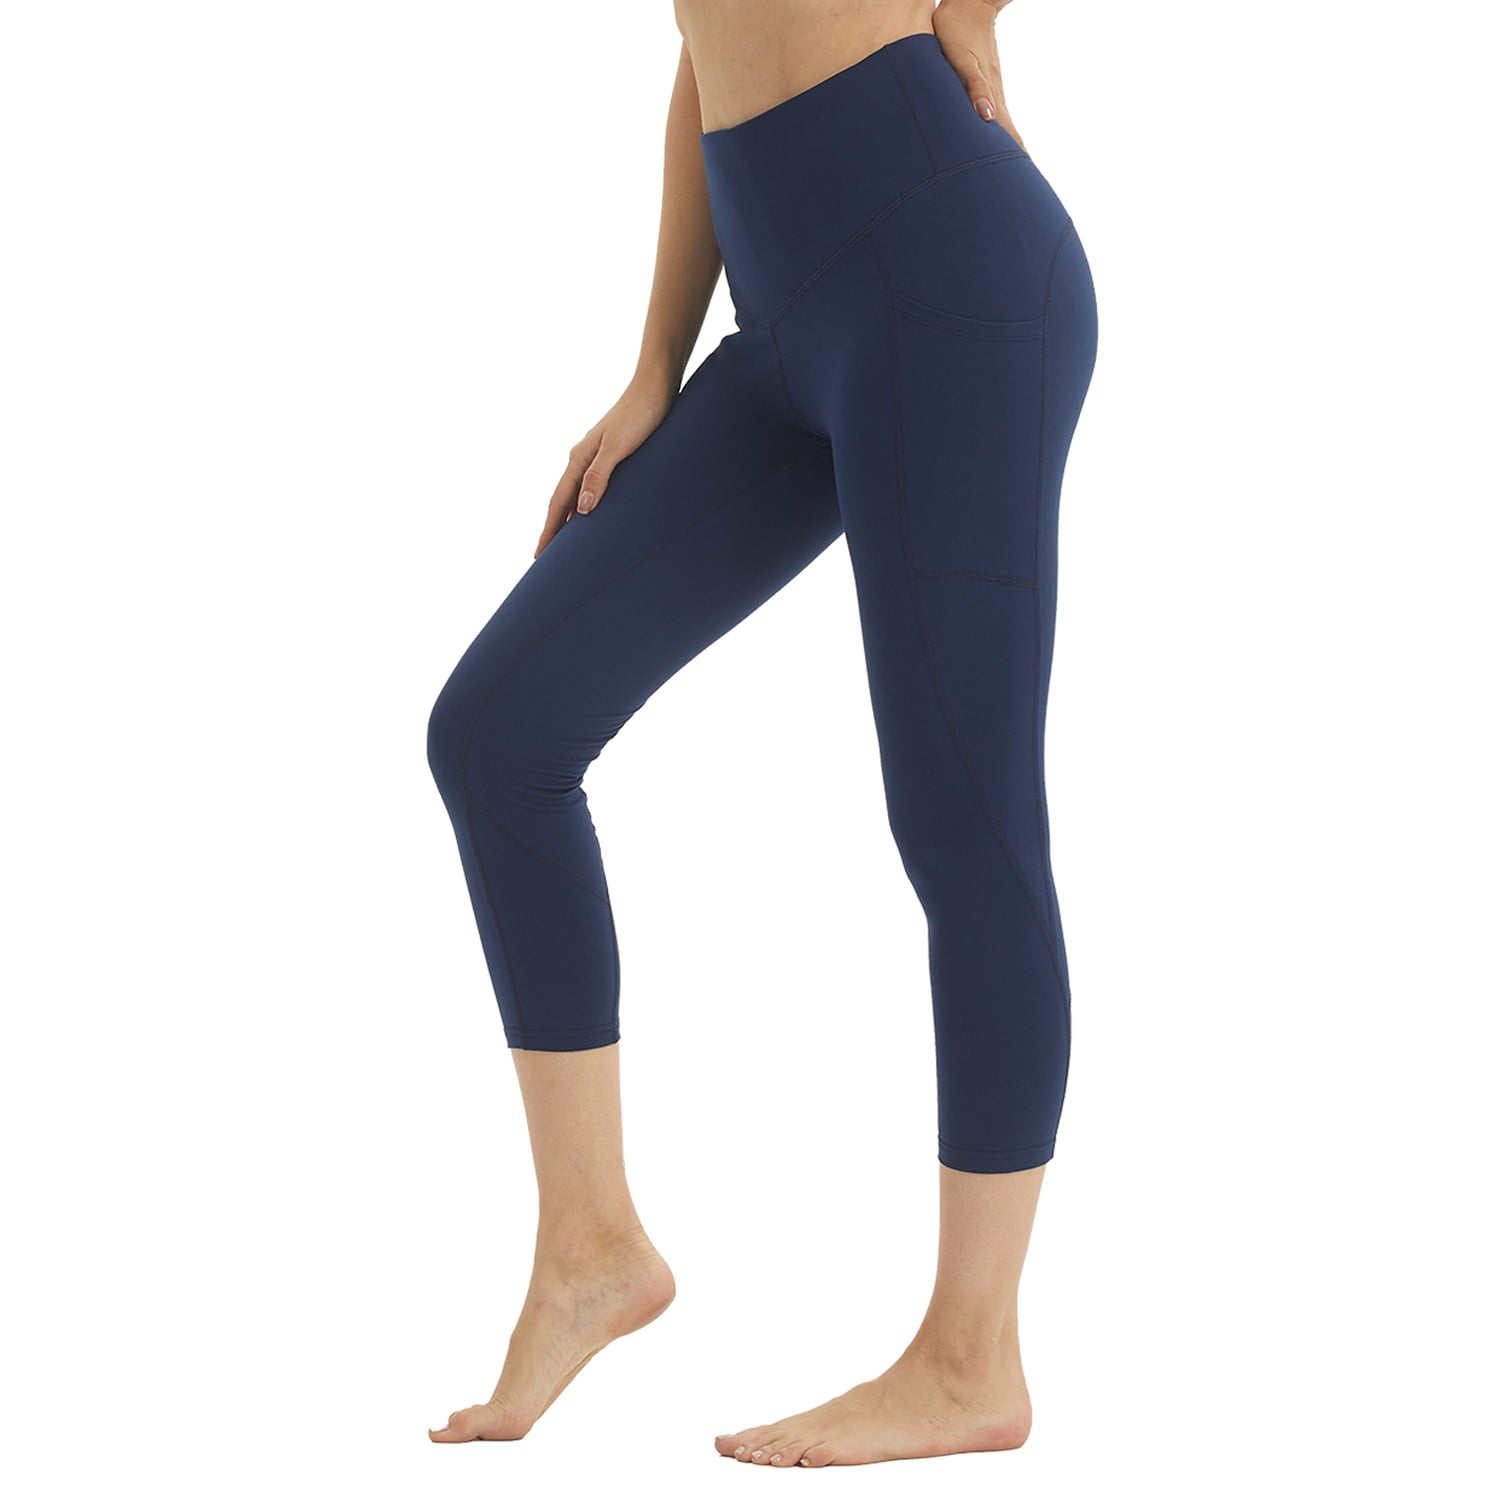 LANBAOSI Womens High Waist Capris Yoga Leggings Tummy Control Workout Running Leggings with Pockets 